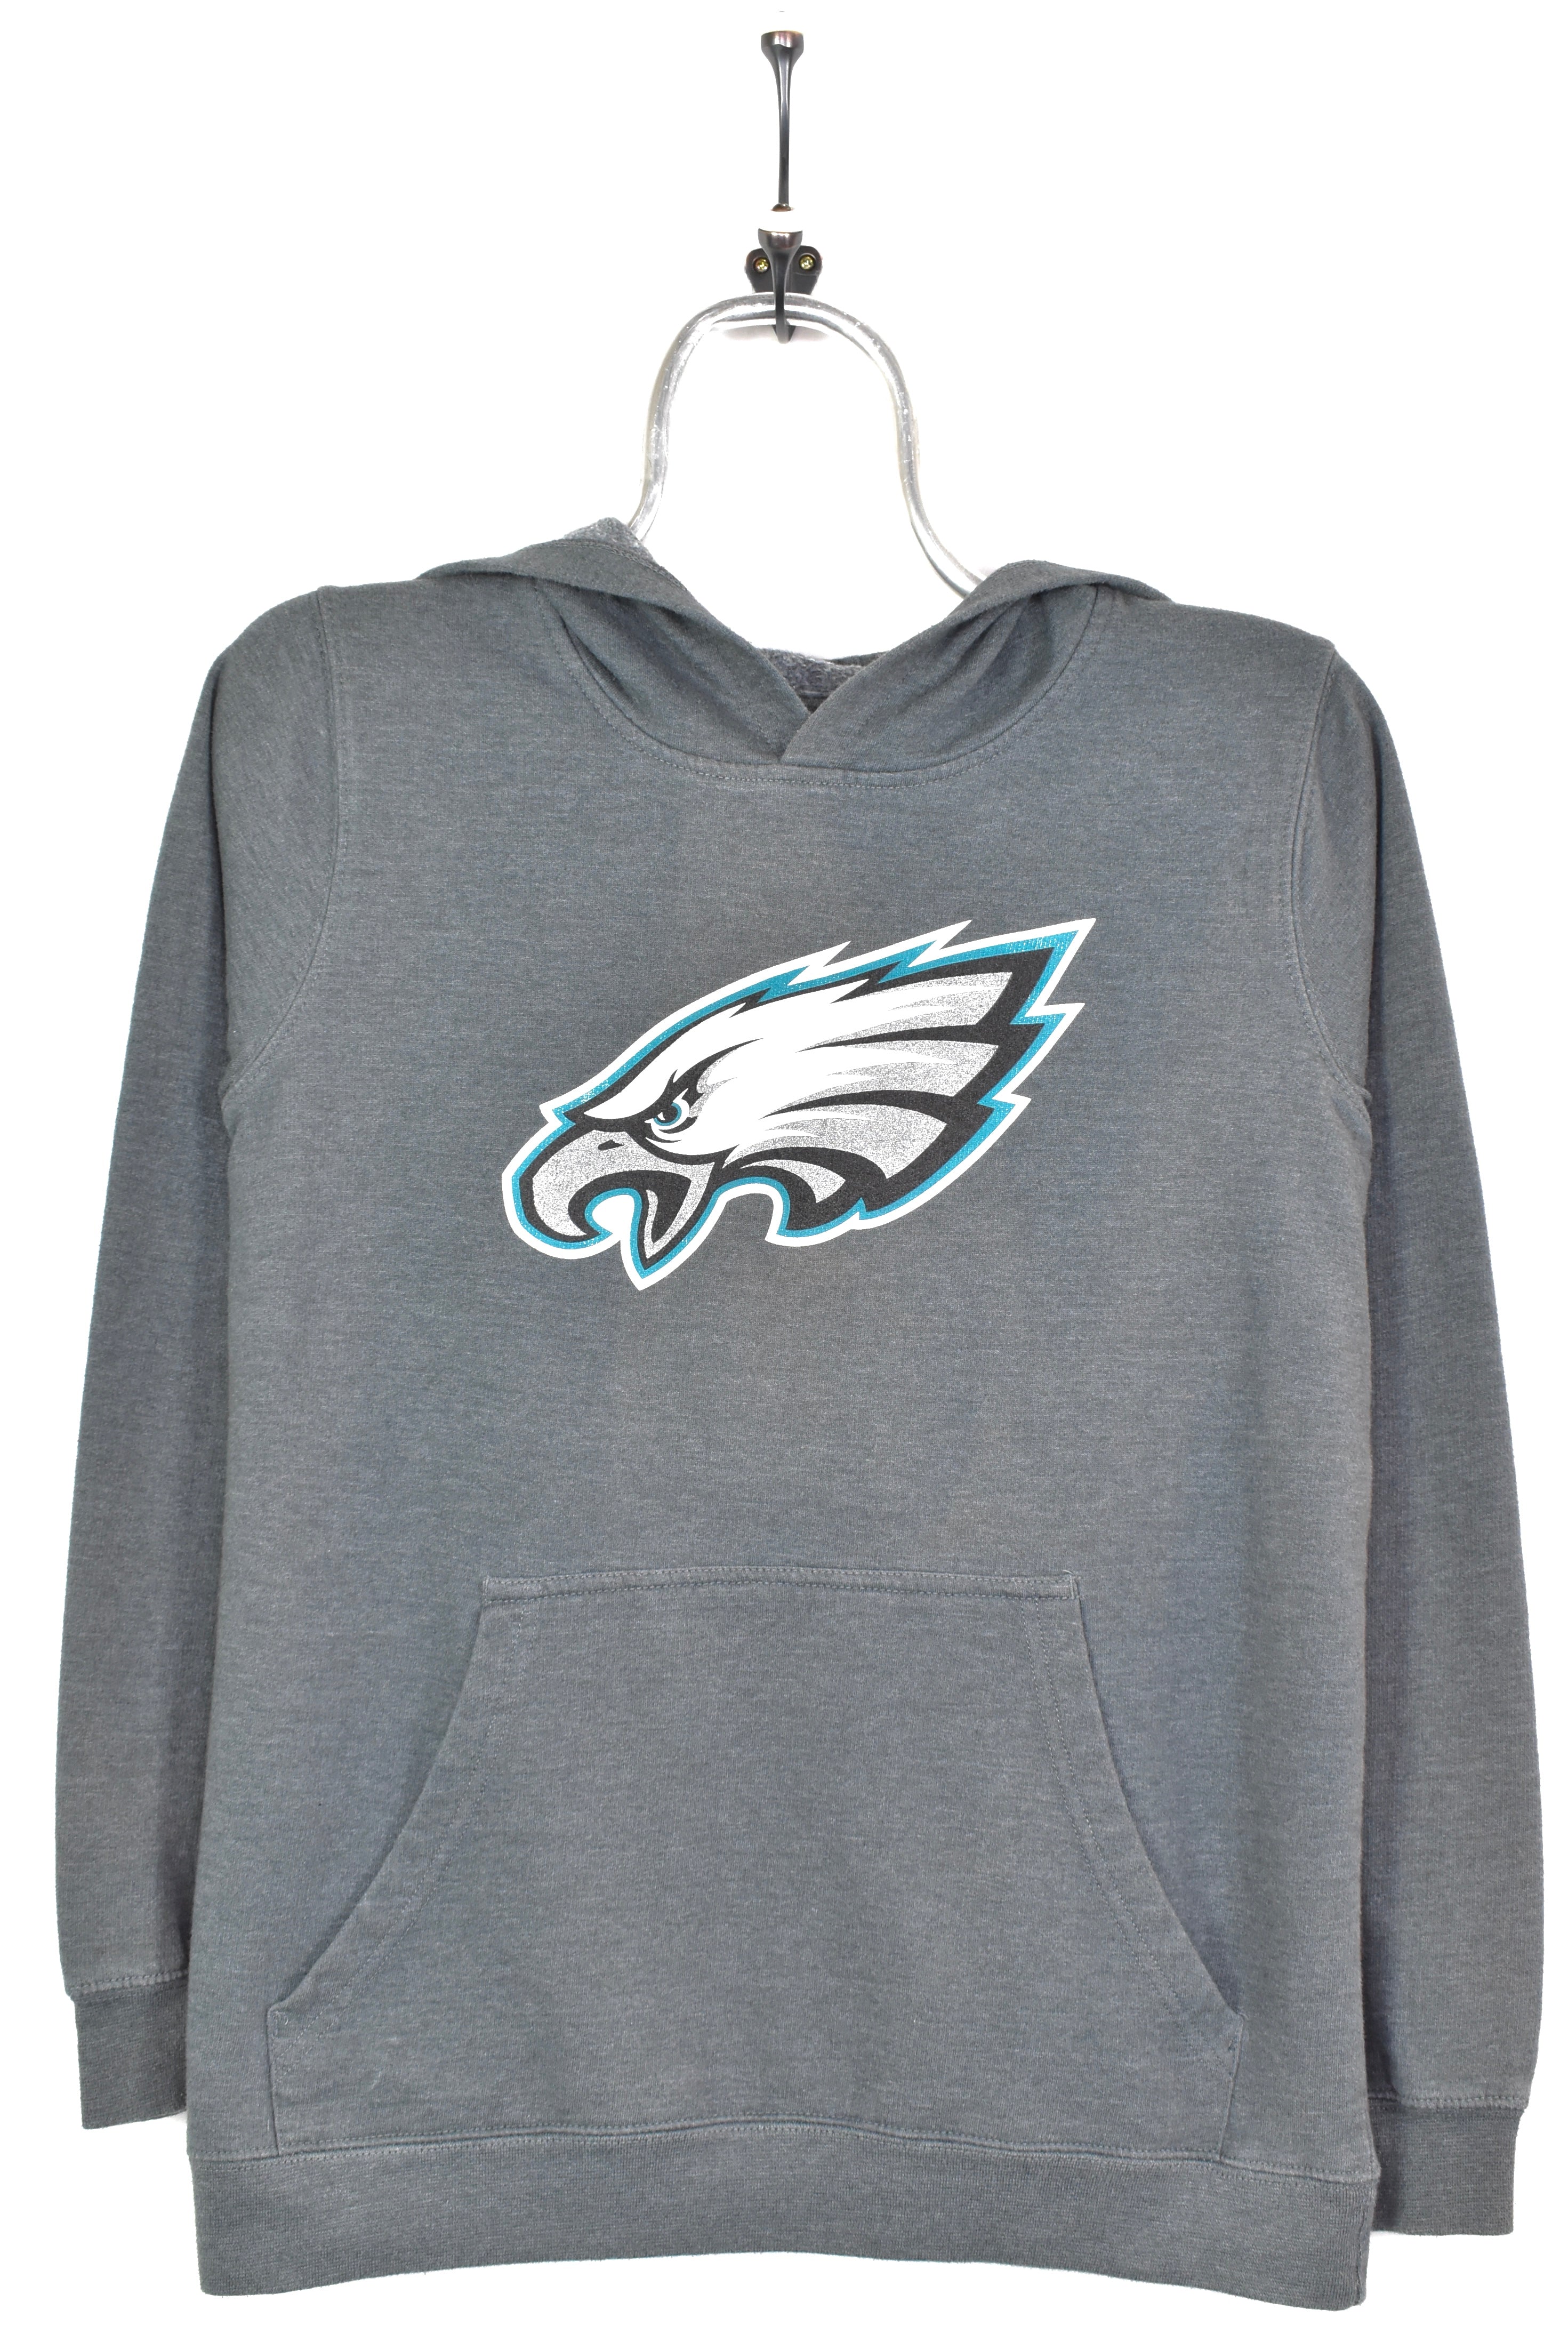 Vintage Philadelphia Eagles sweatshirt, 80s NFL graphic crewneck - XS, grey